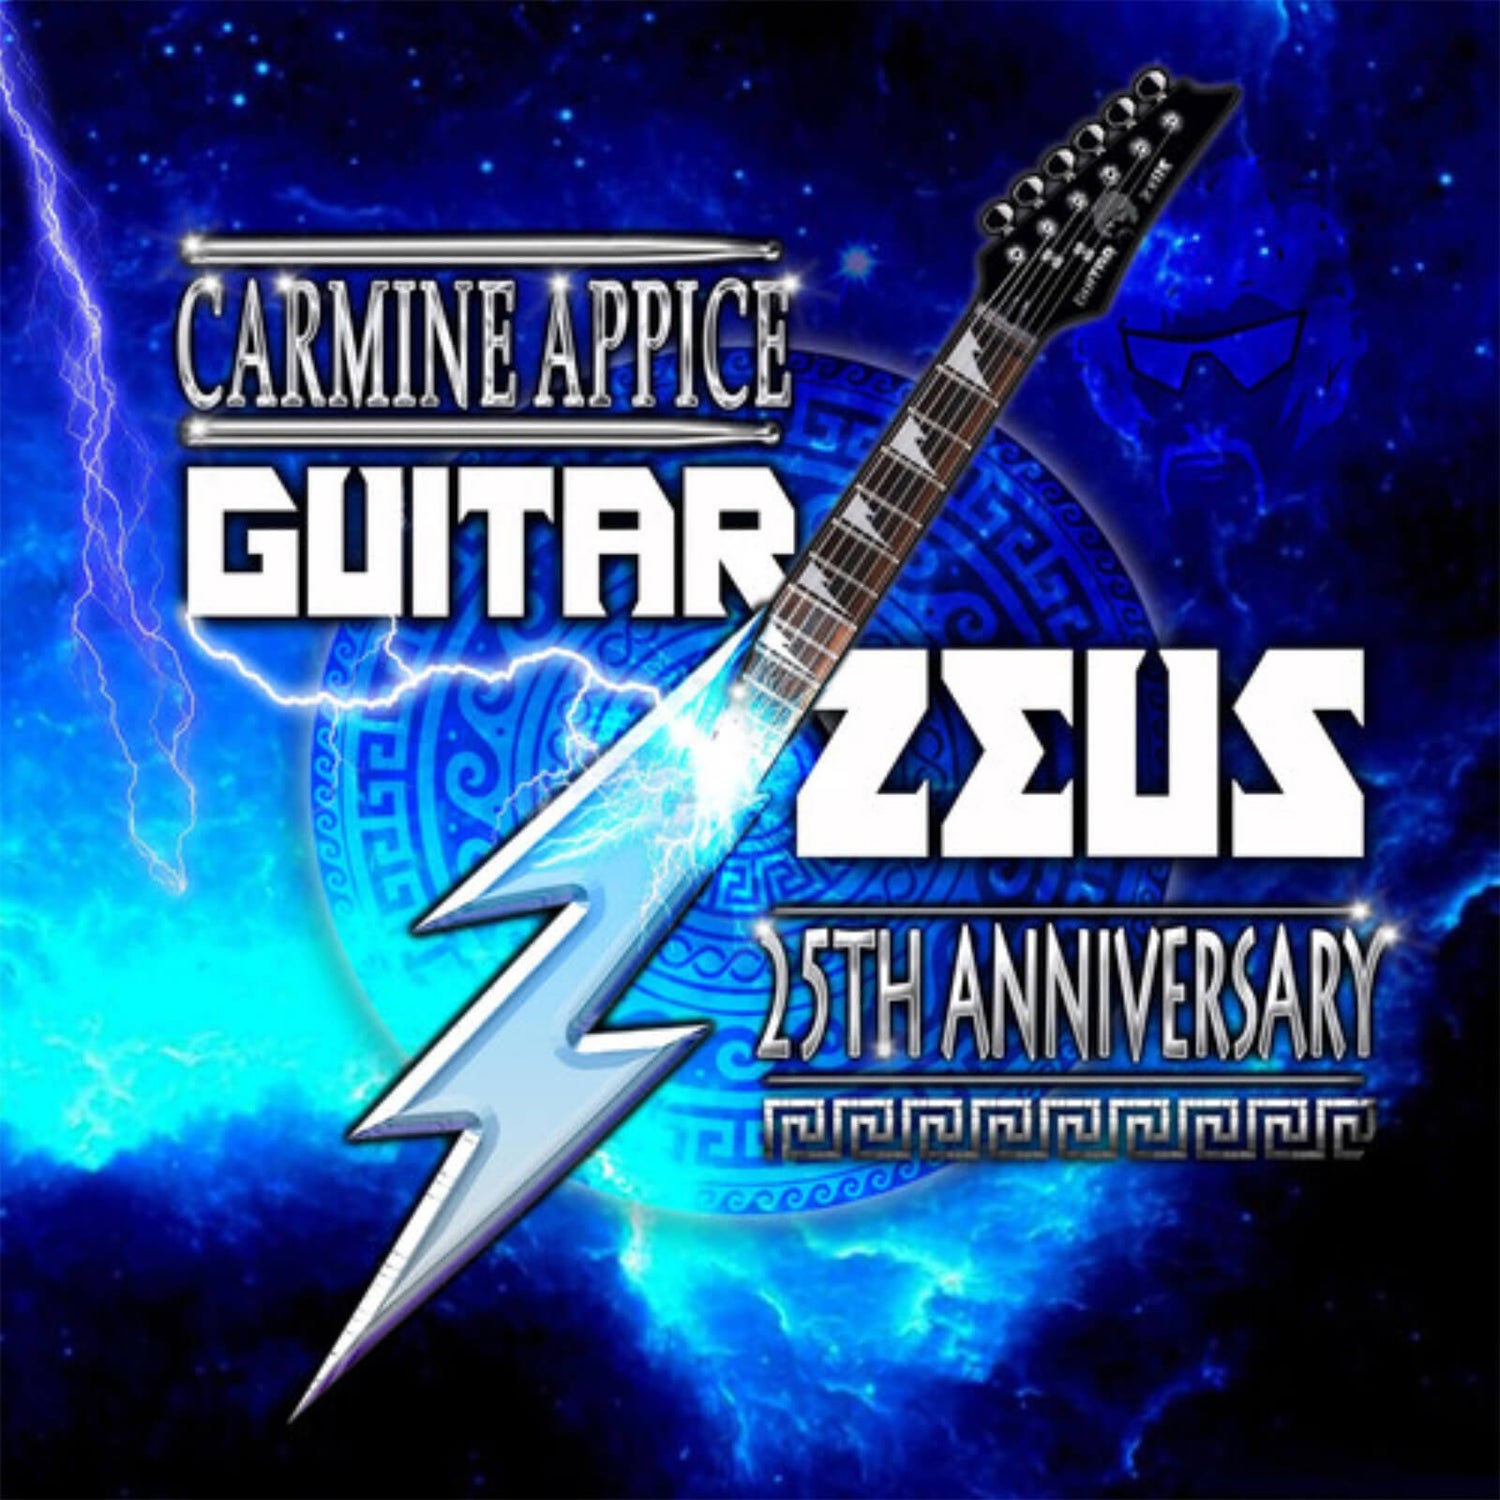 Carmine Appice - Guitar Zeus 25th Anniversary Vinyl Box Set Box Set (Includes 3xCD)